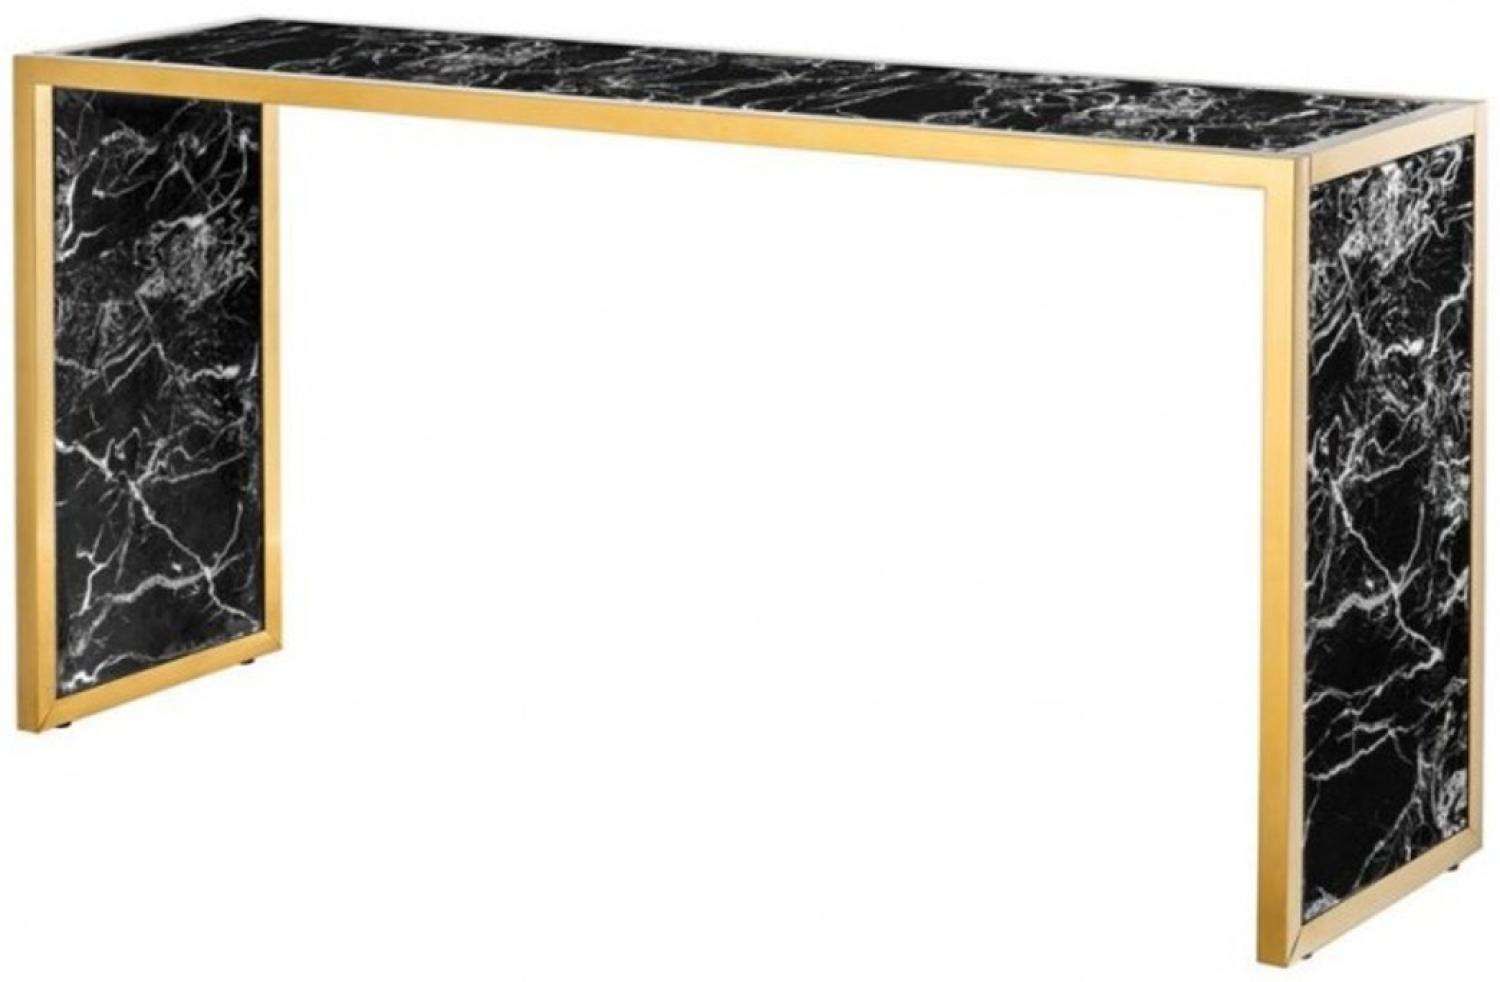 Casa Padrino Luxus Konsole Gold 150 x 40 x H. 75 cm - Luxus Kollektion Bild 1